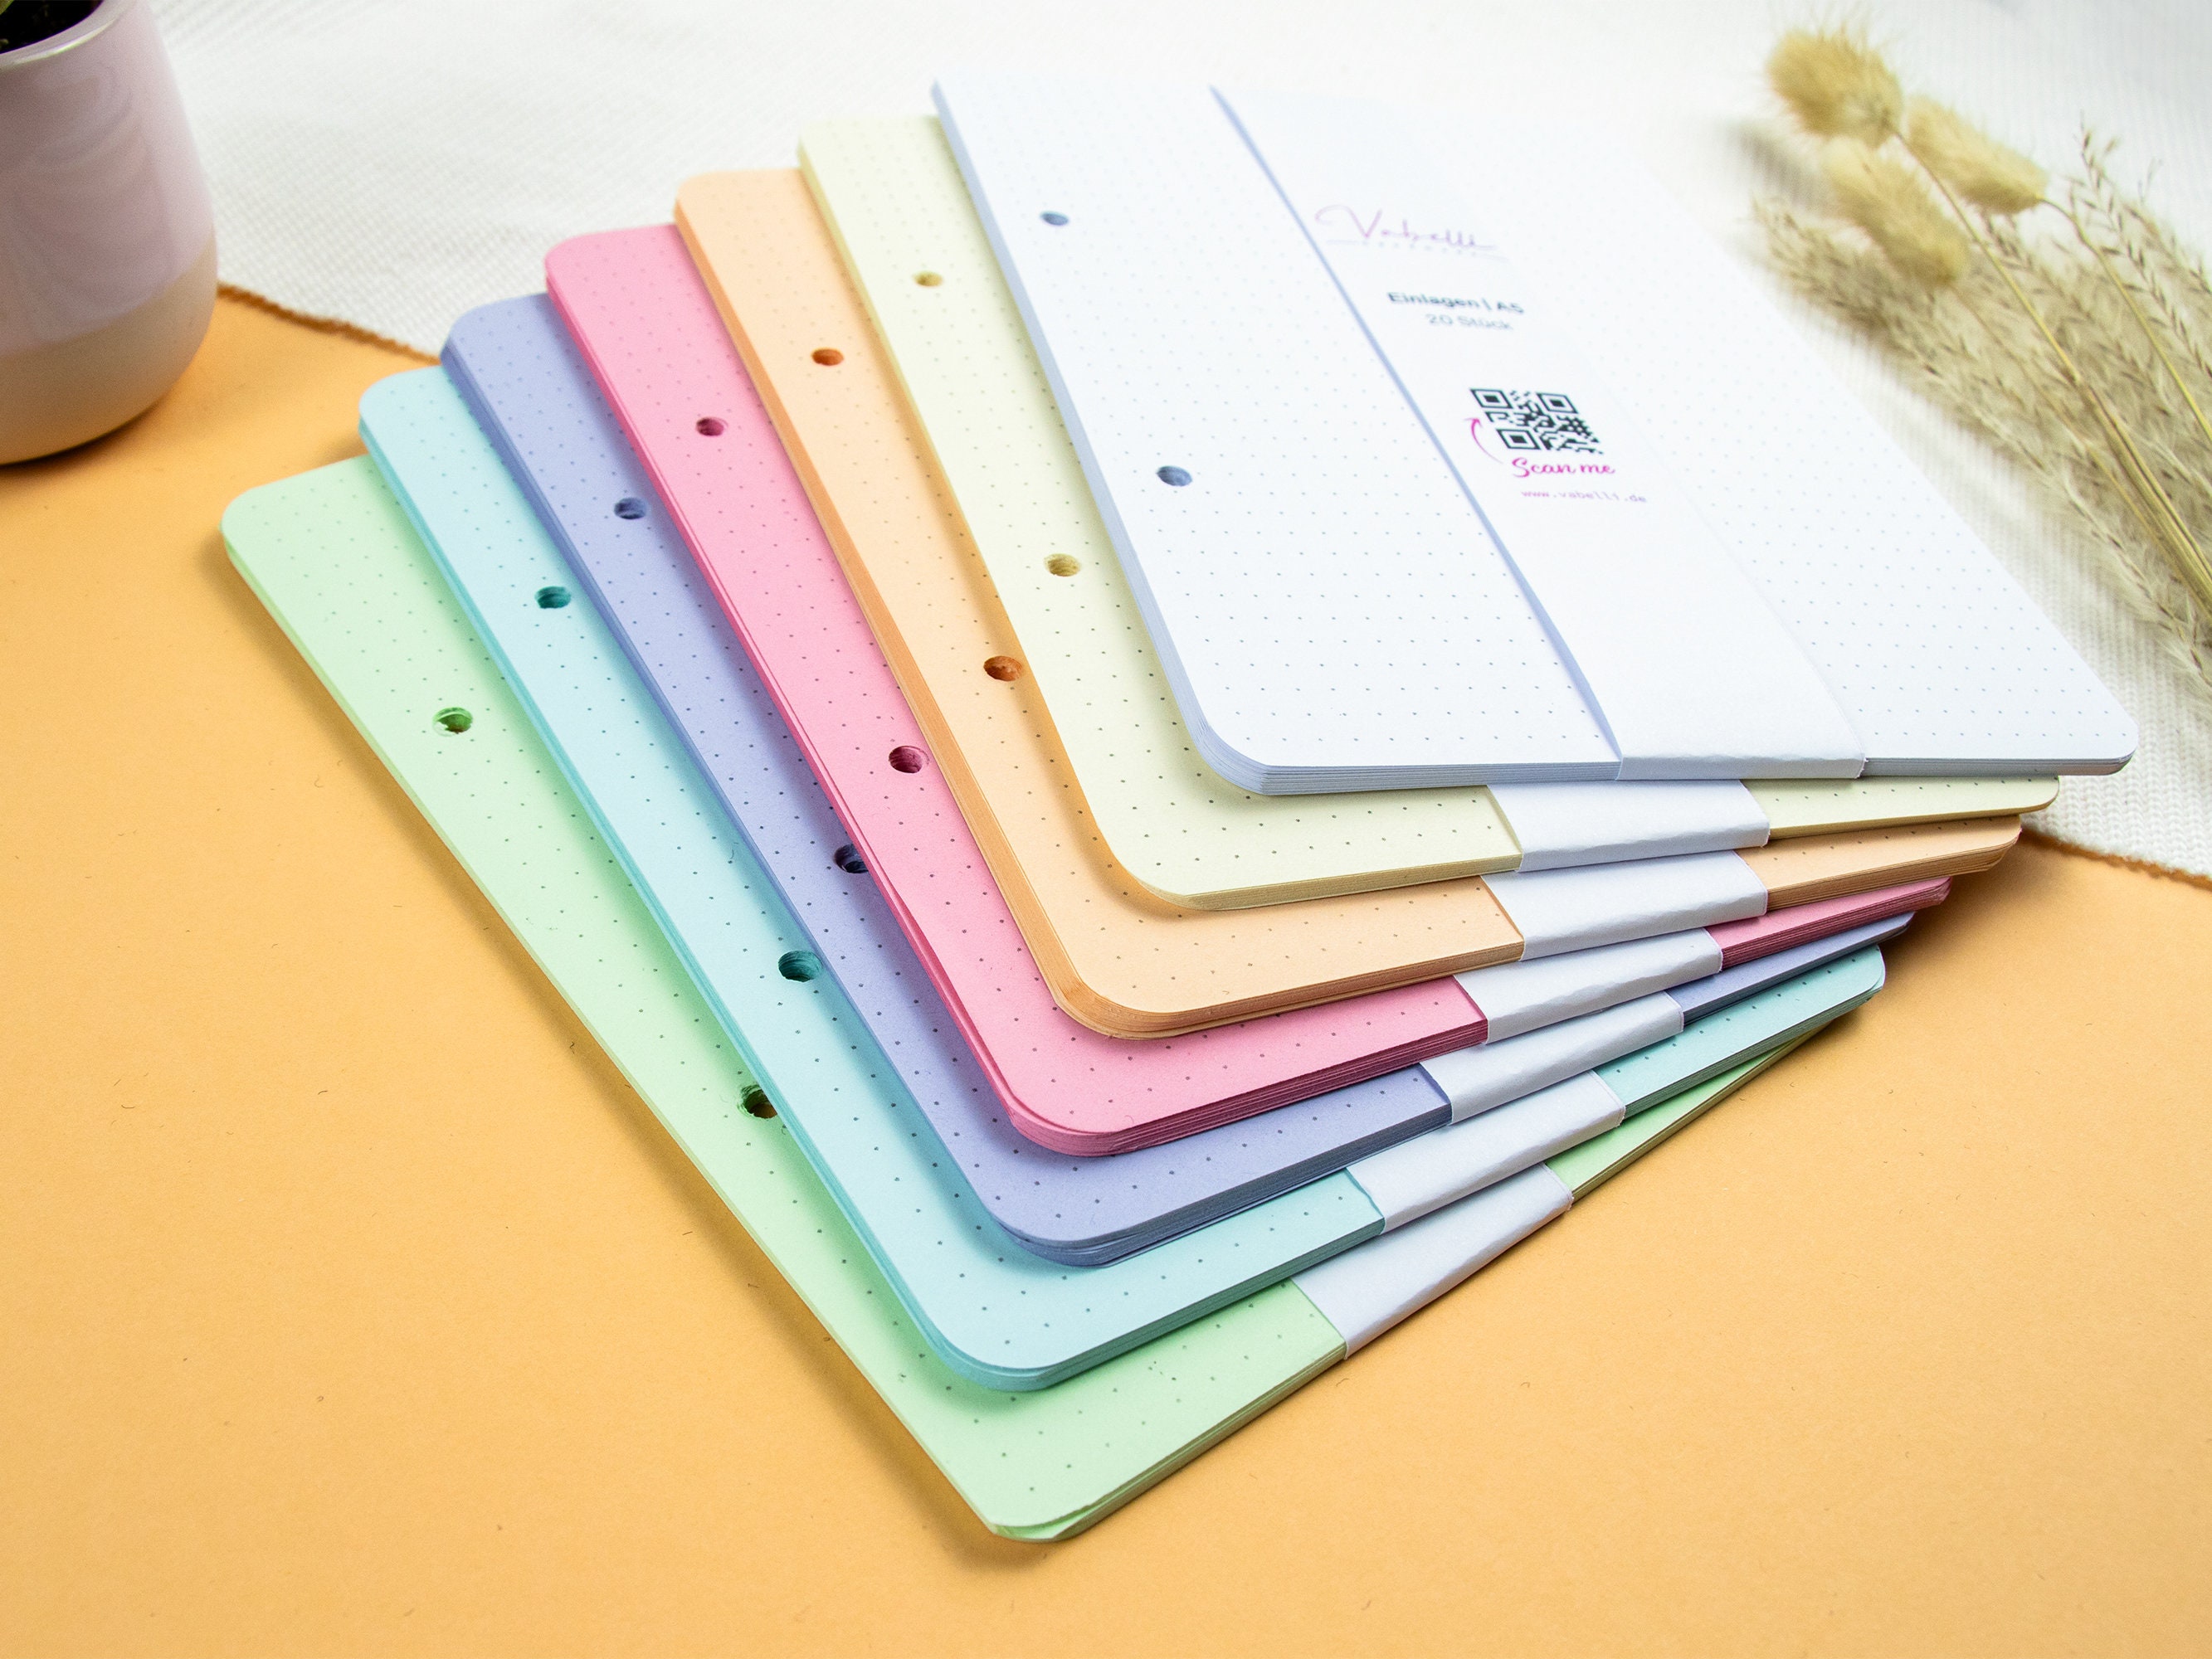 cheap colored folders paper chemises dossier